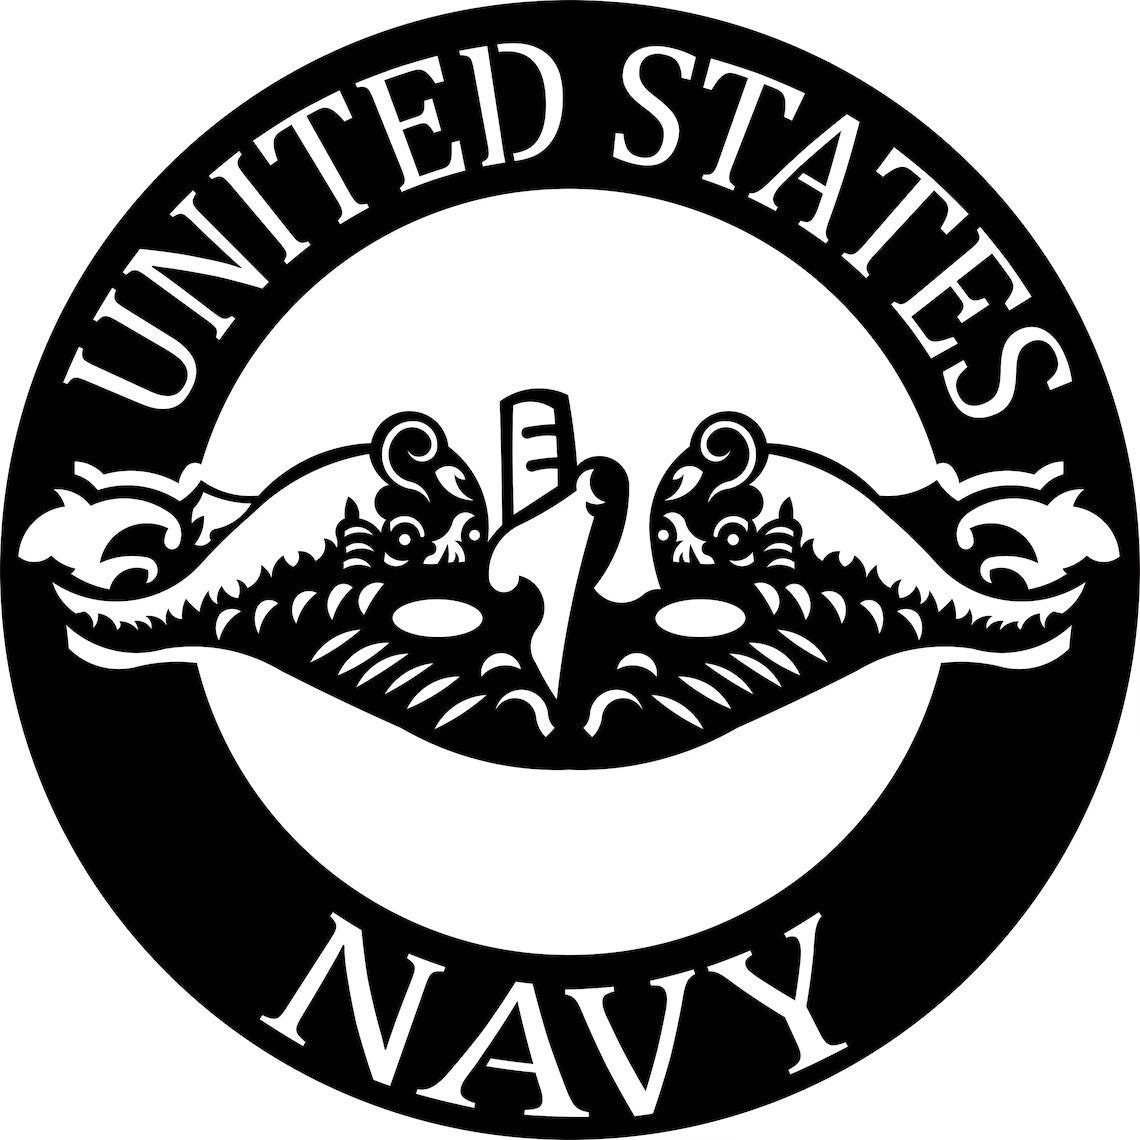 USA Army Navy Marine Air Force Coast Guard Homeland Security US Space ...